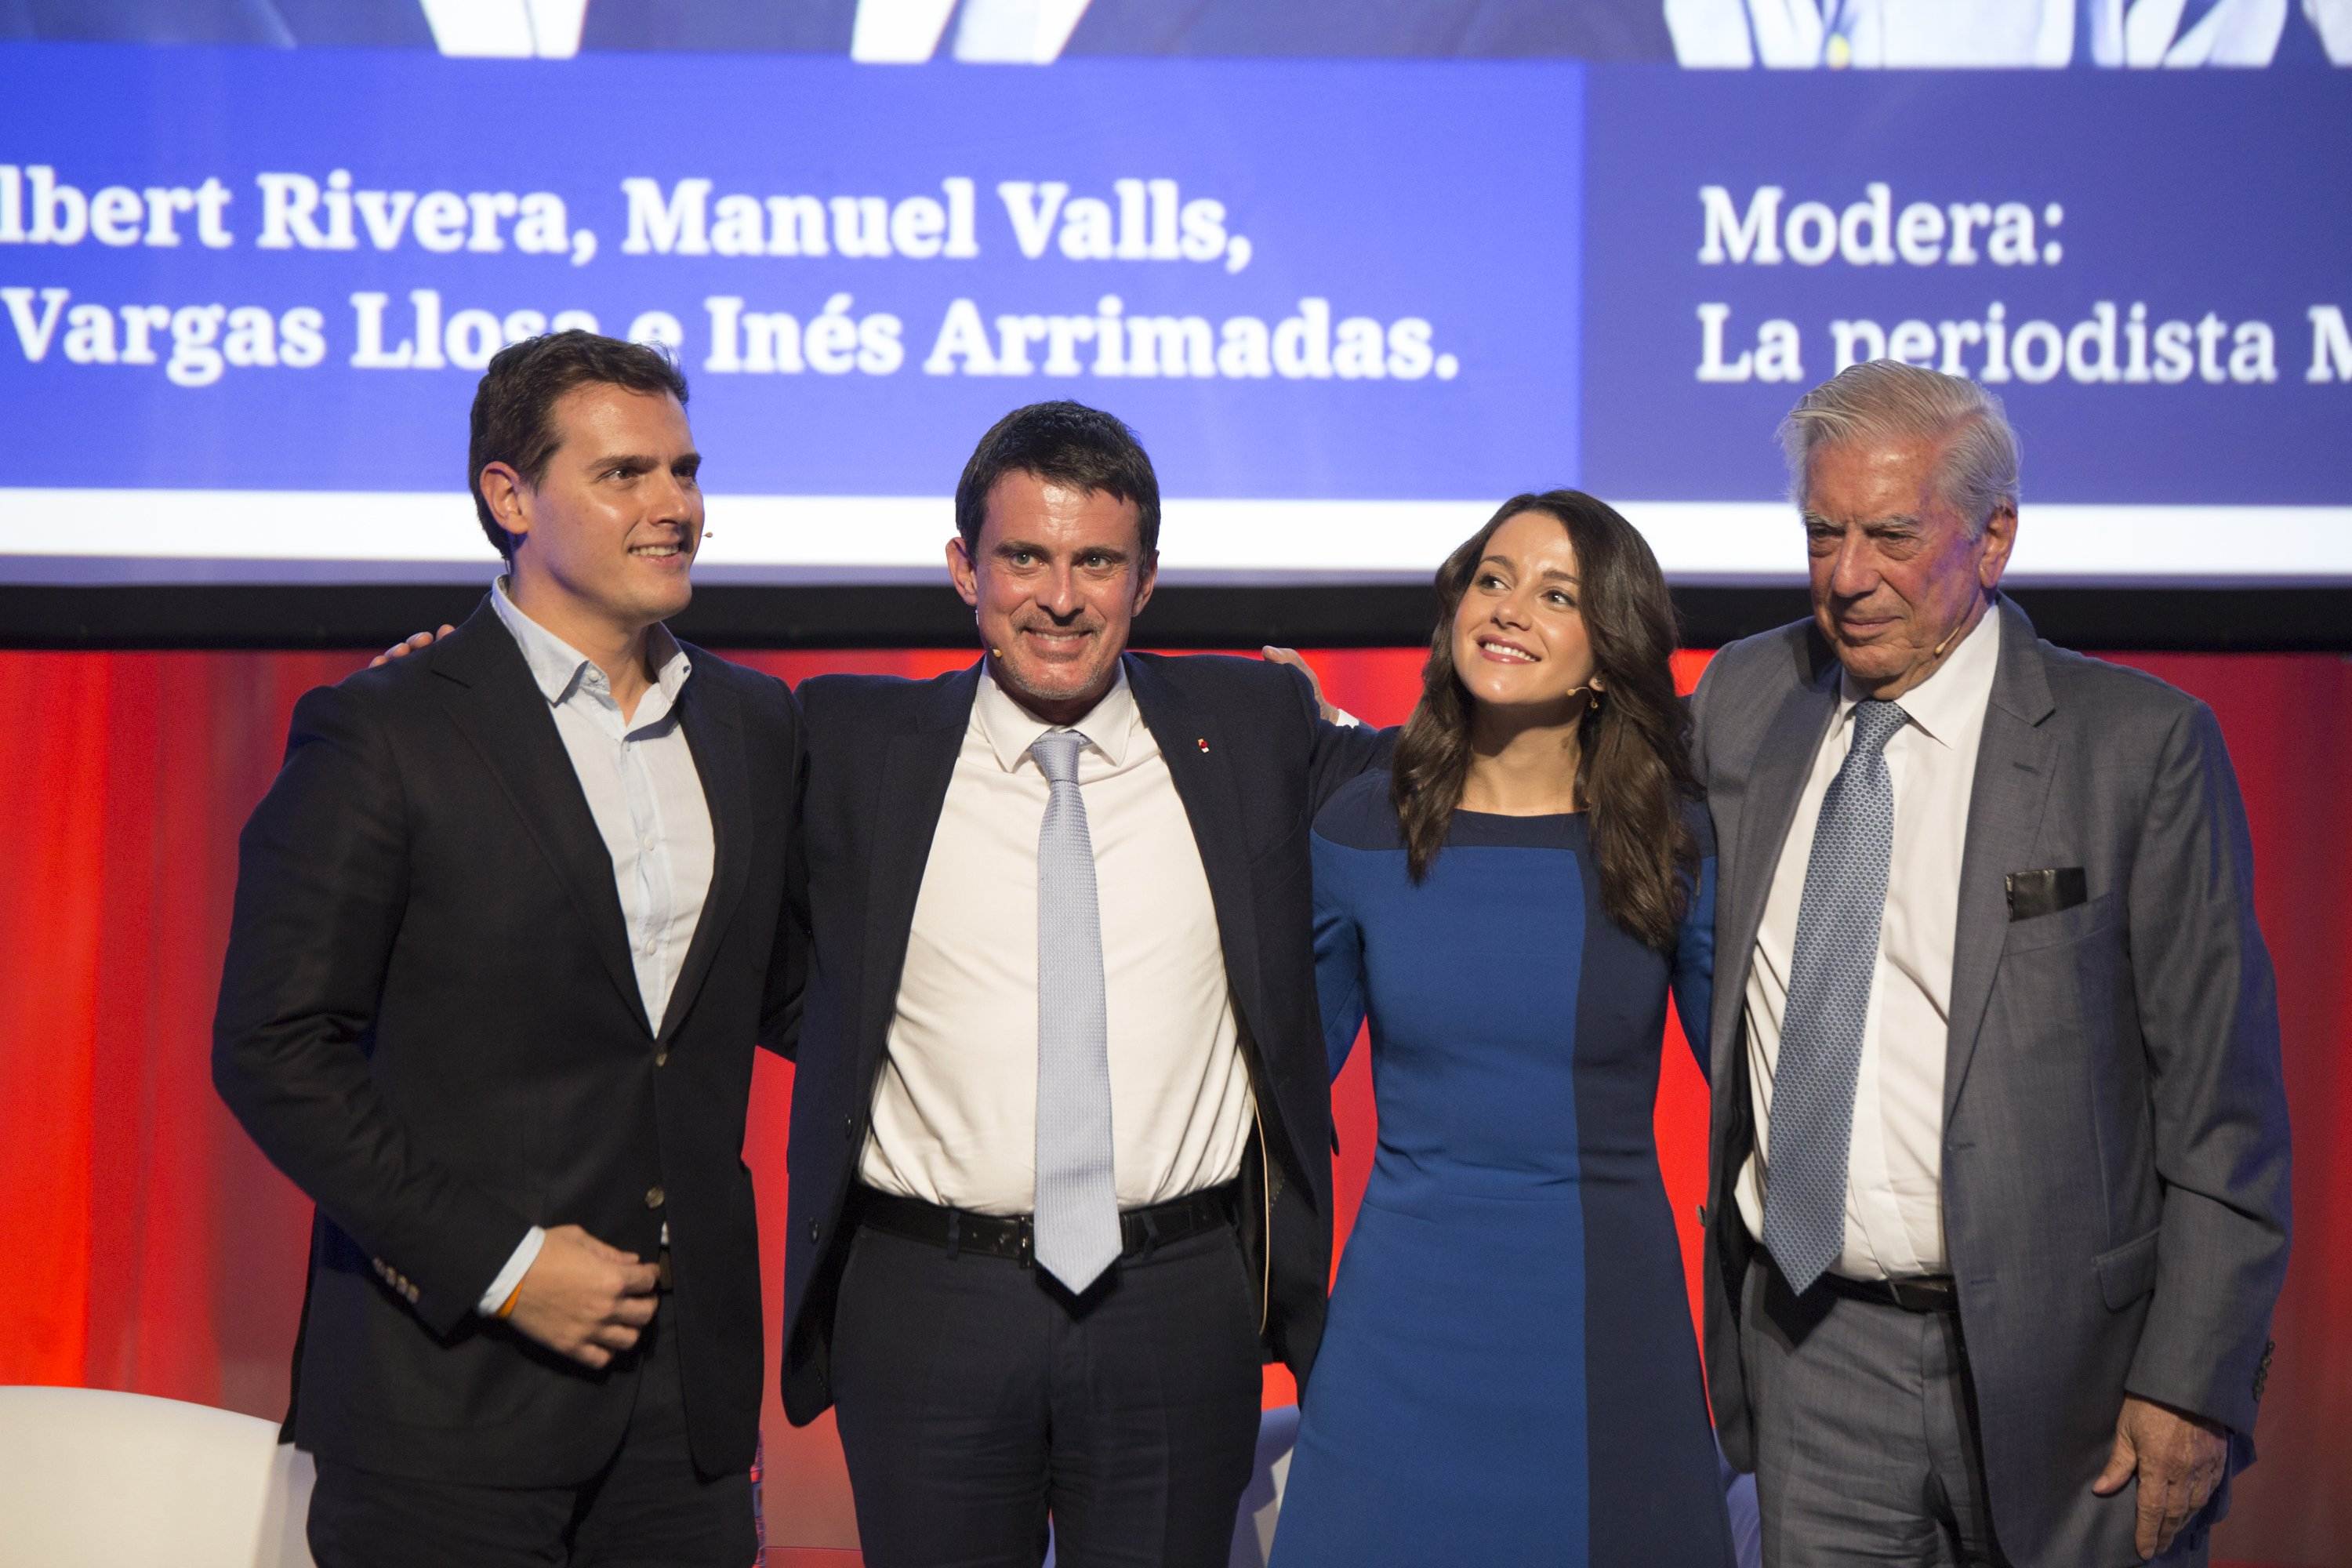 Ciutadans Albert Rivera Ines Arrimadas Mario Vargas Llosa Manuel Valls - Sergi Alcàzar